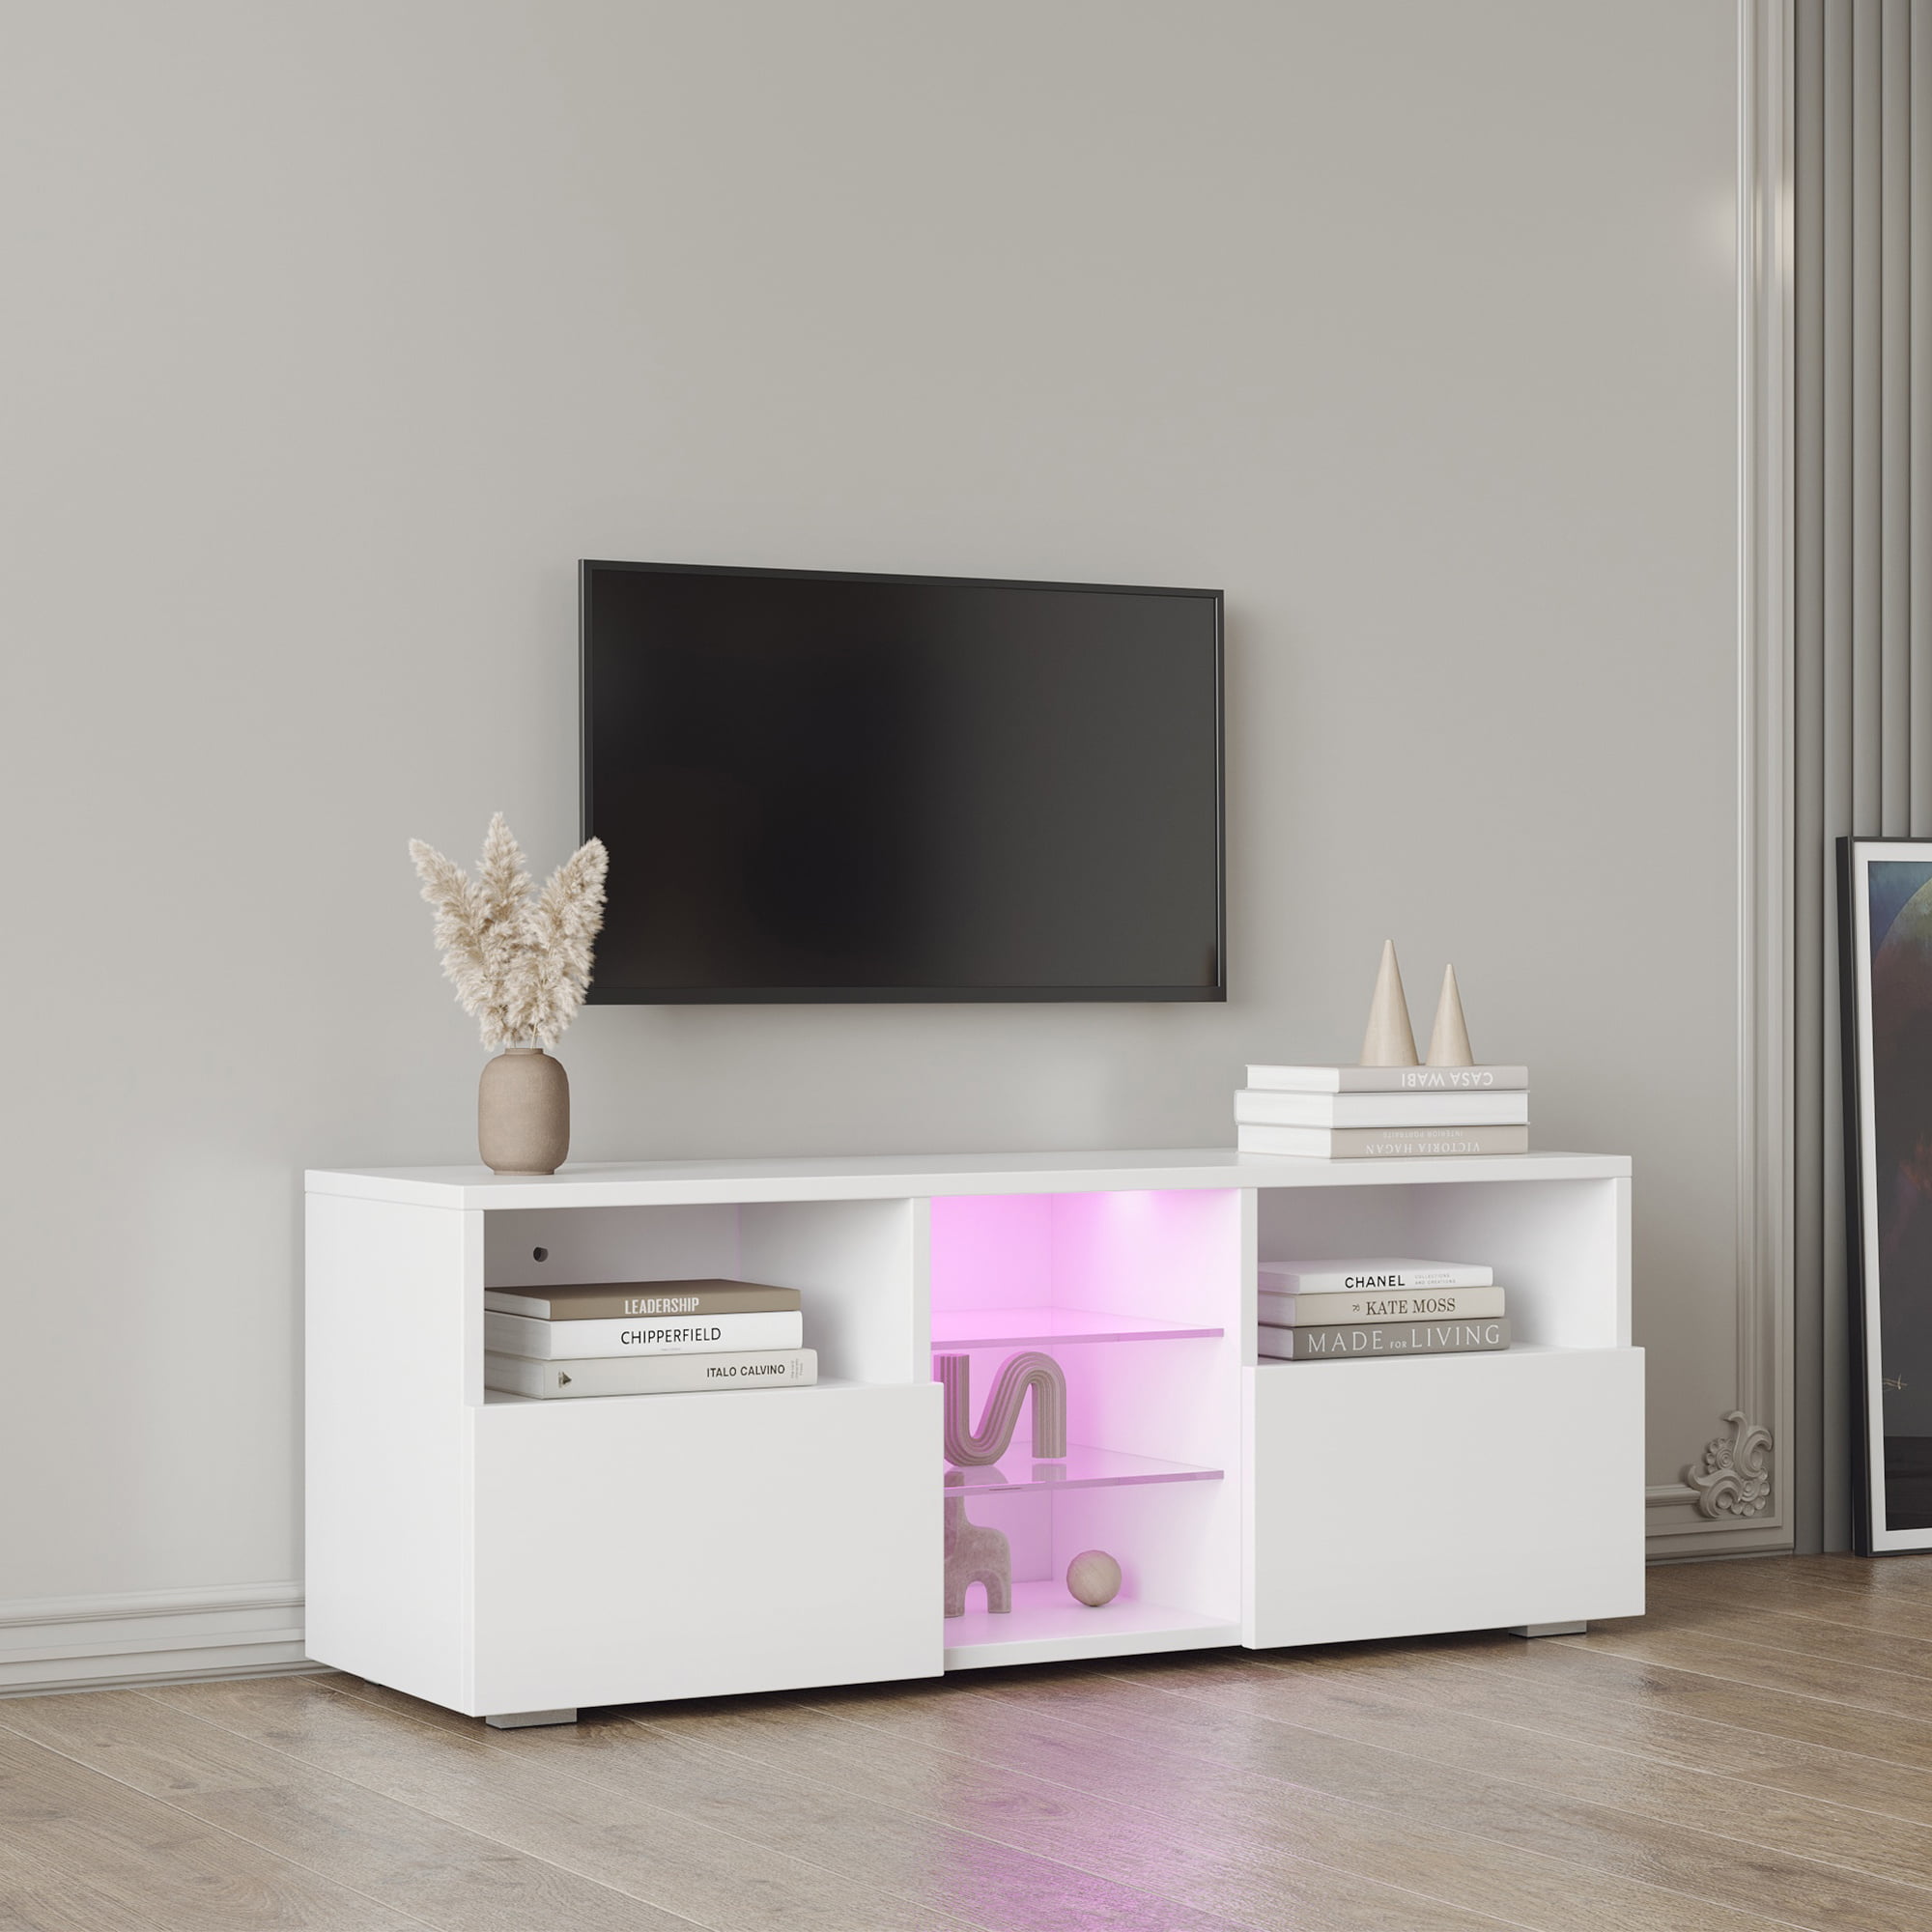 Details about   High Gloss Modern TV Stand Cabinet Unit 20 Color LED Lights Drawer for 55" TV US 